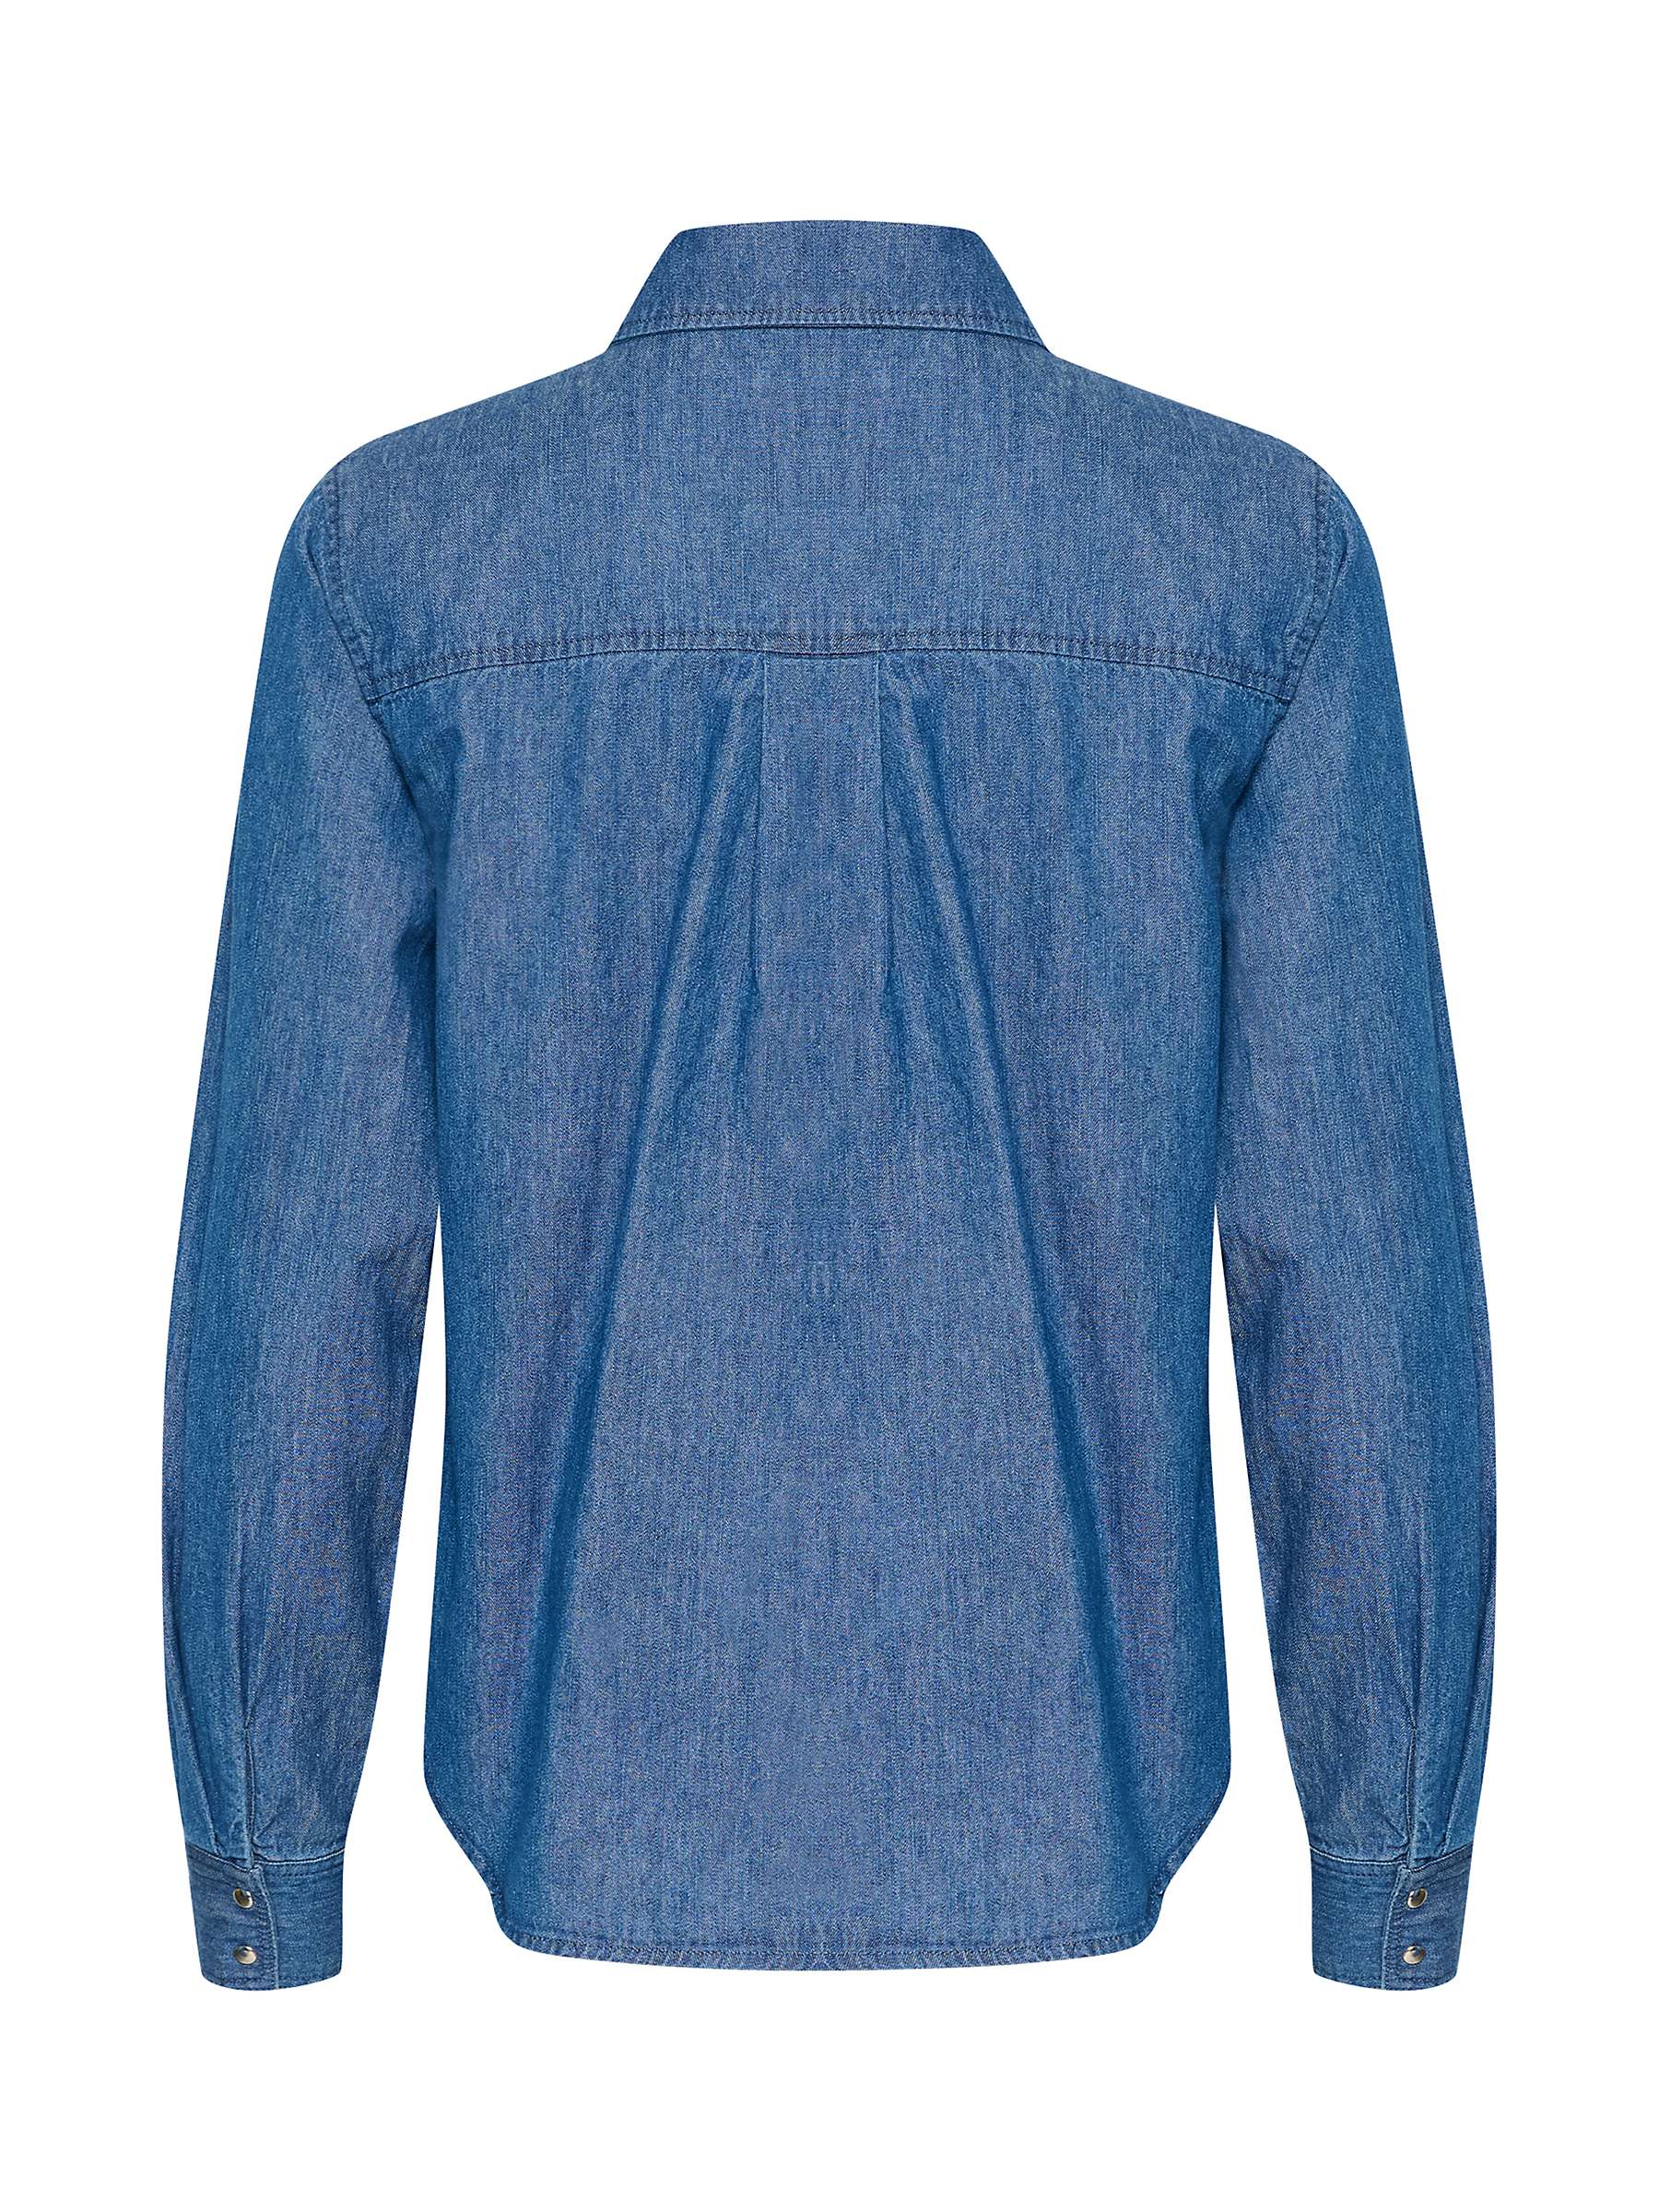 Buy Part Two Filuca Denim Shirt, Medium Blue Online at johnlewis.com